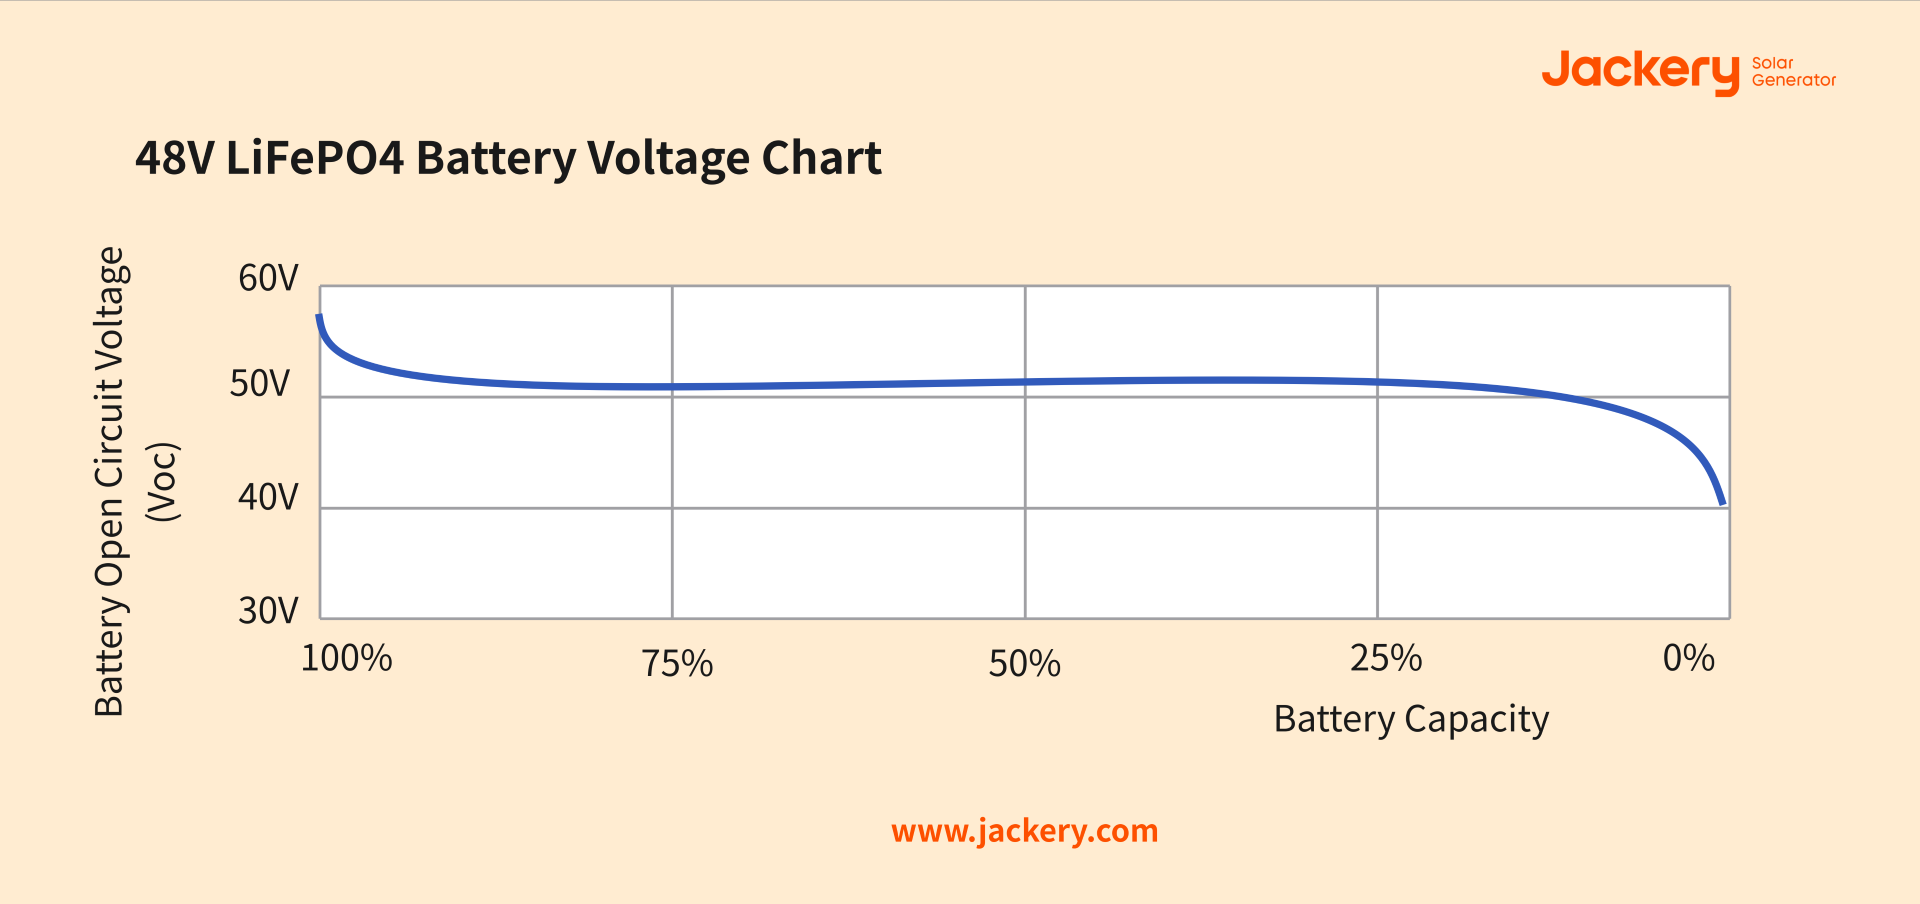 48v LiFePO4 battery voltage chart